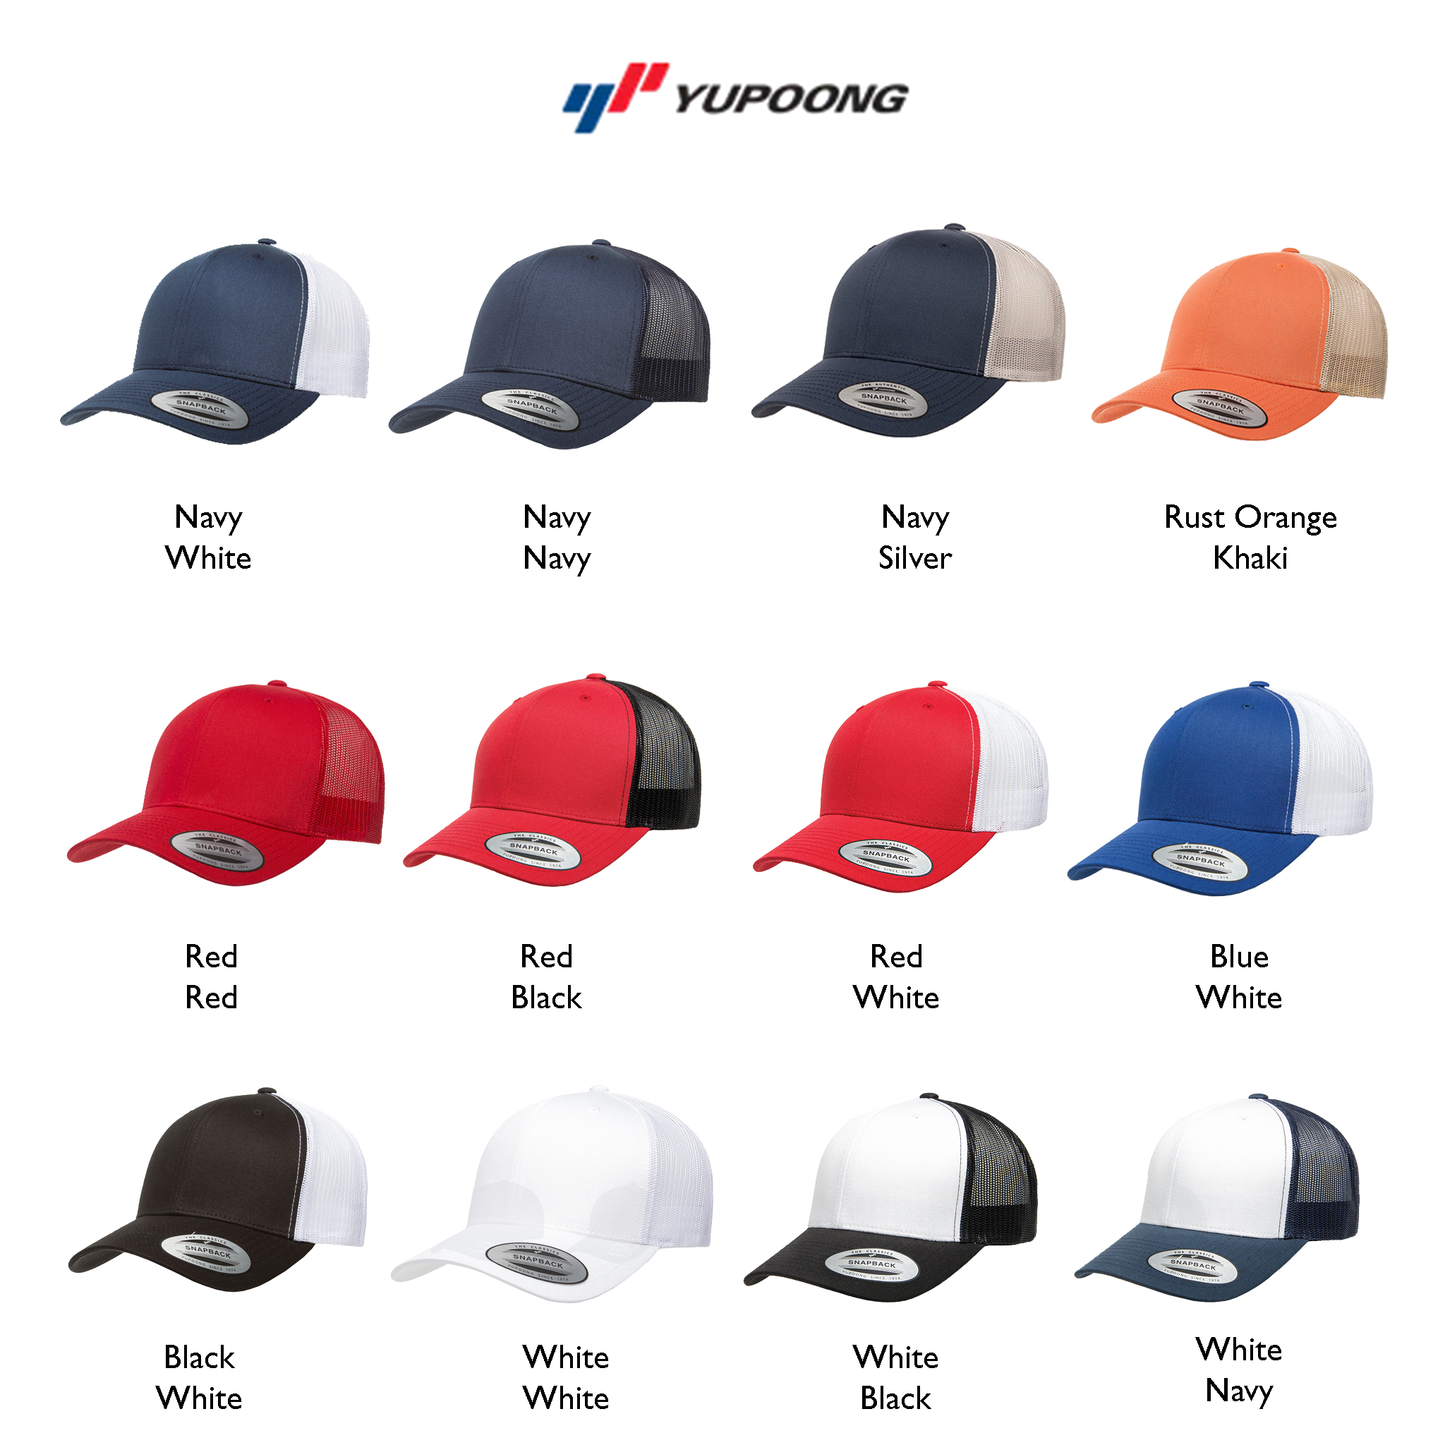 Stars and Stripes Snapback Trucker Hat